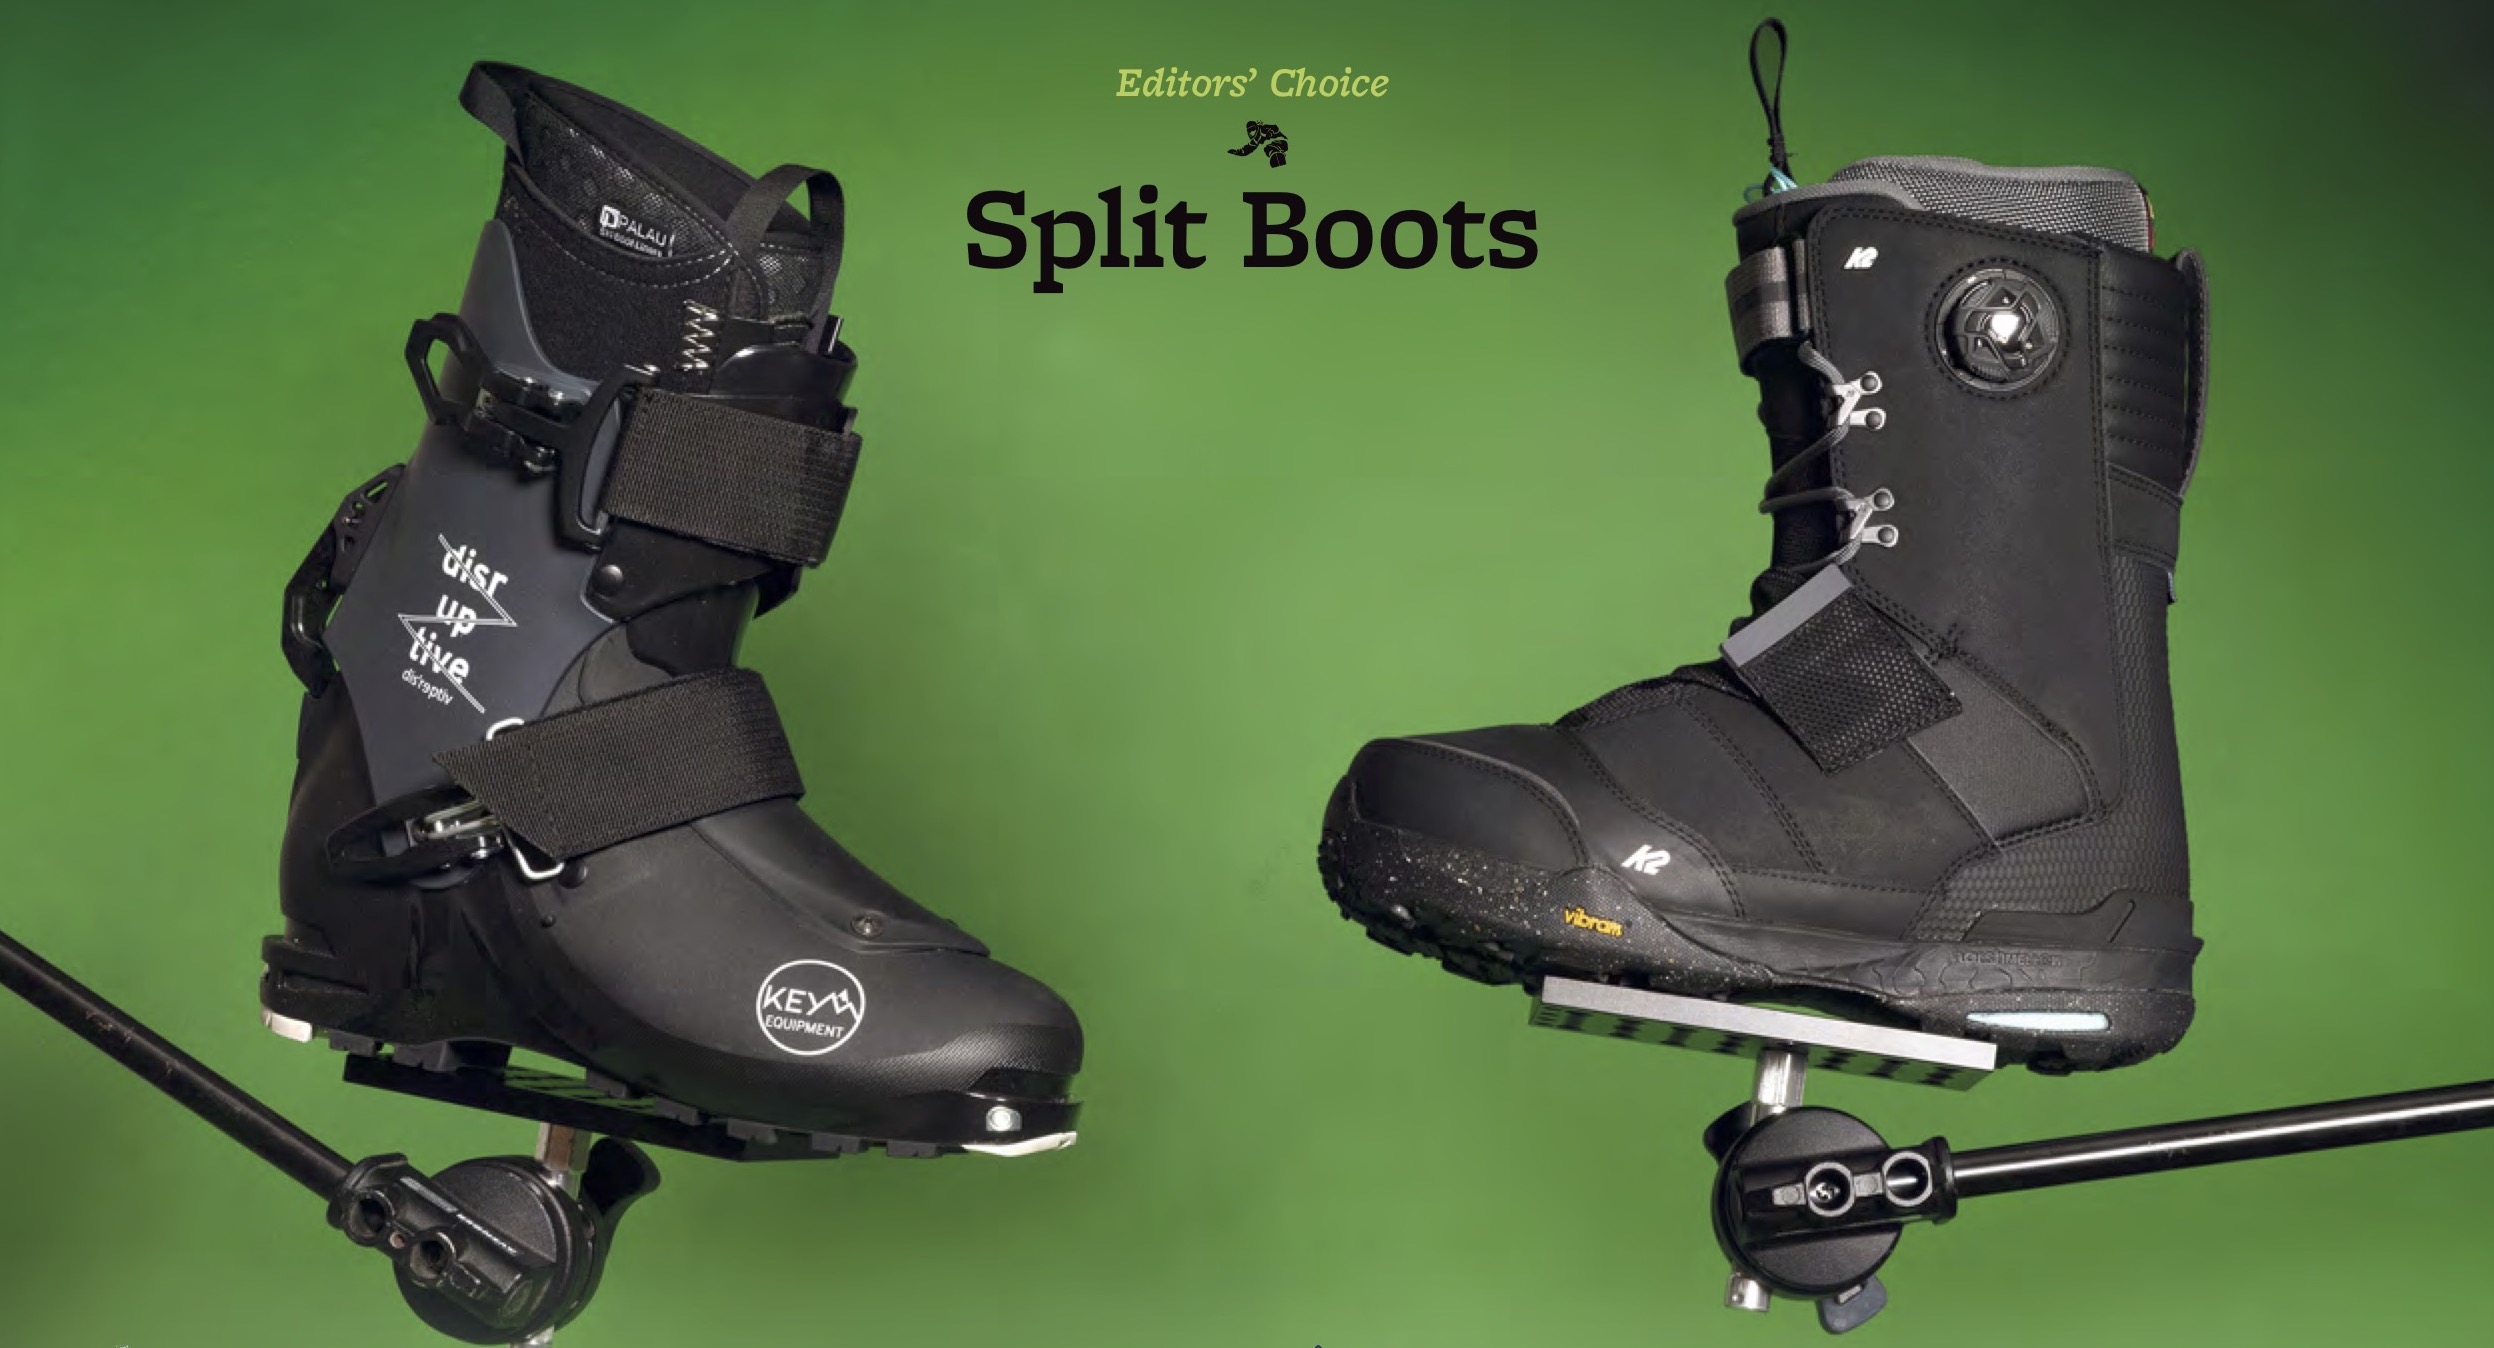 Editors’ Choice Splitboard Boots